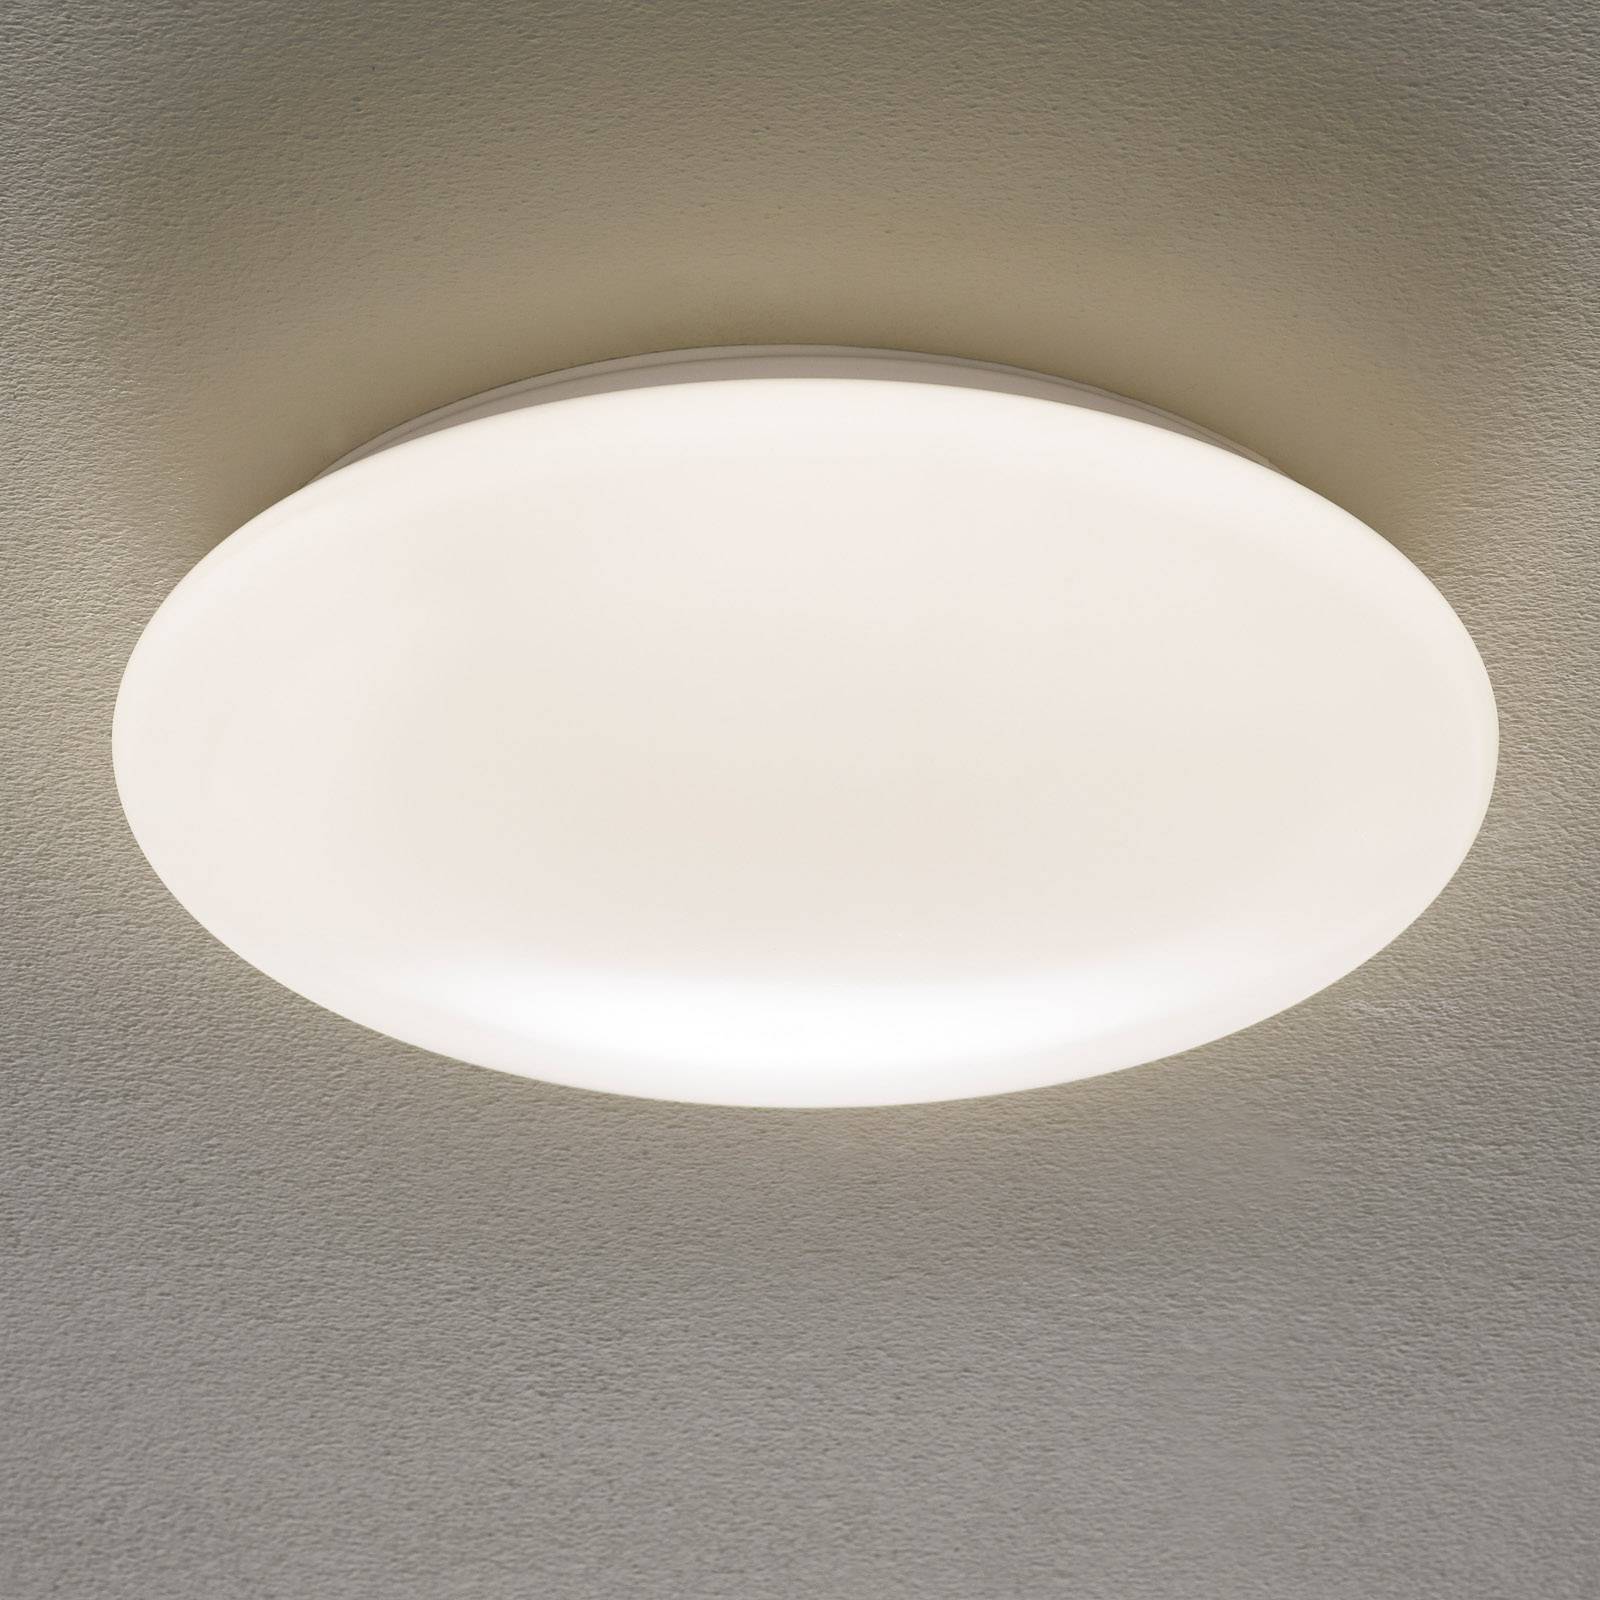 LED-Deckenlampe Altona MN3, universalweiß Ø 32,8cm von Ledino